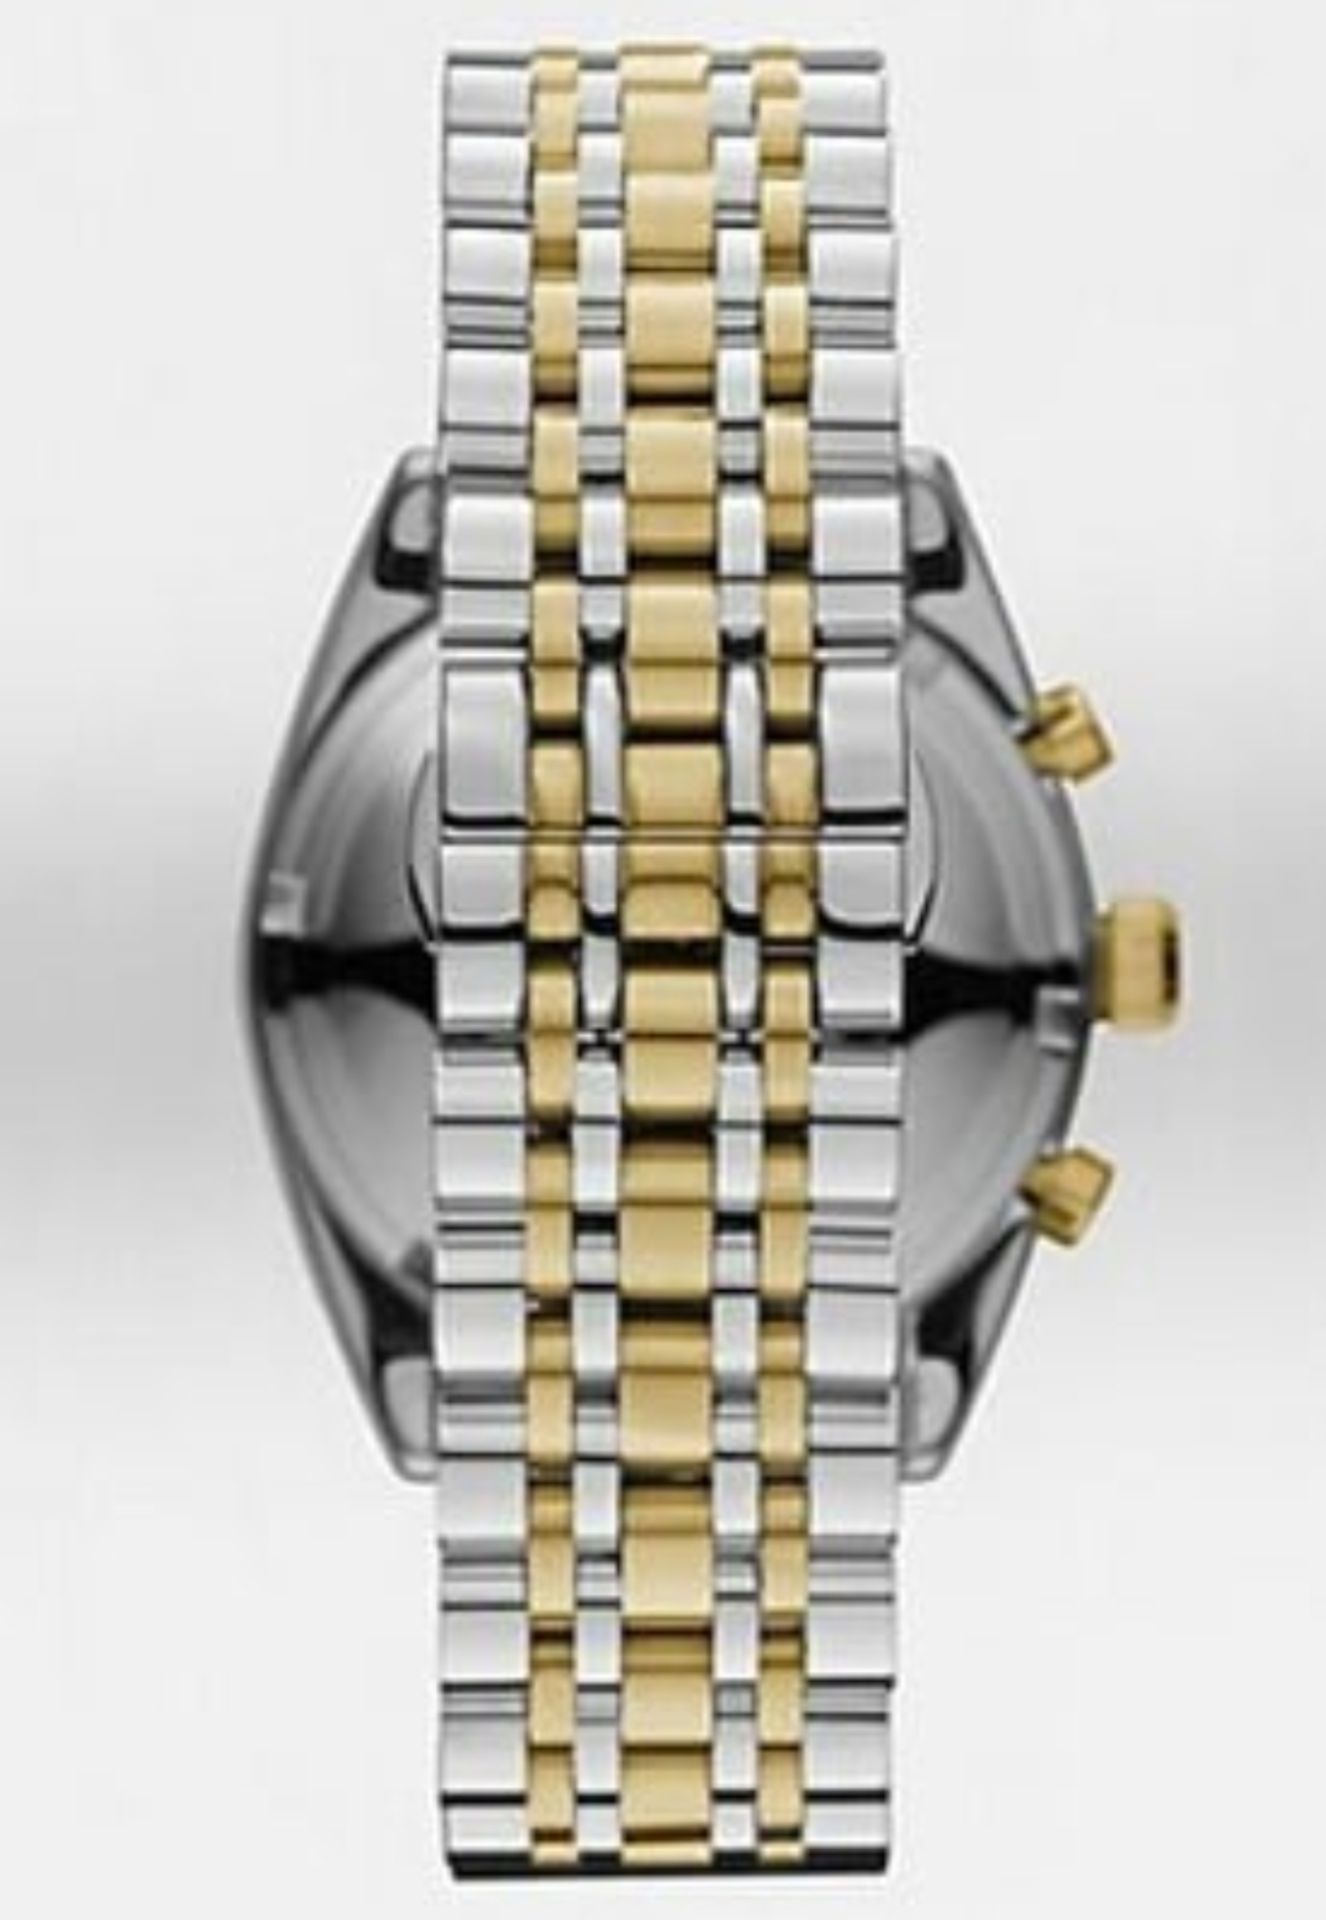 Emporio Armani AR0396 Men's two Tone Gold & Silver Quartz Chronograph Watch - Image 5 of 8